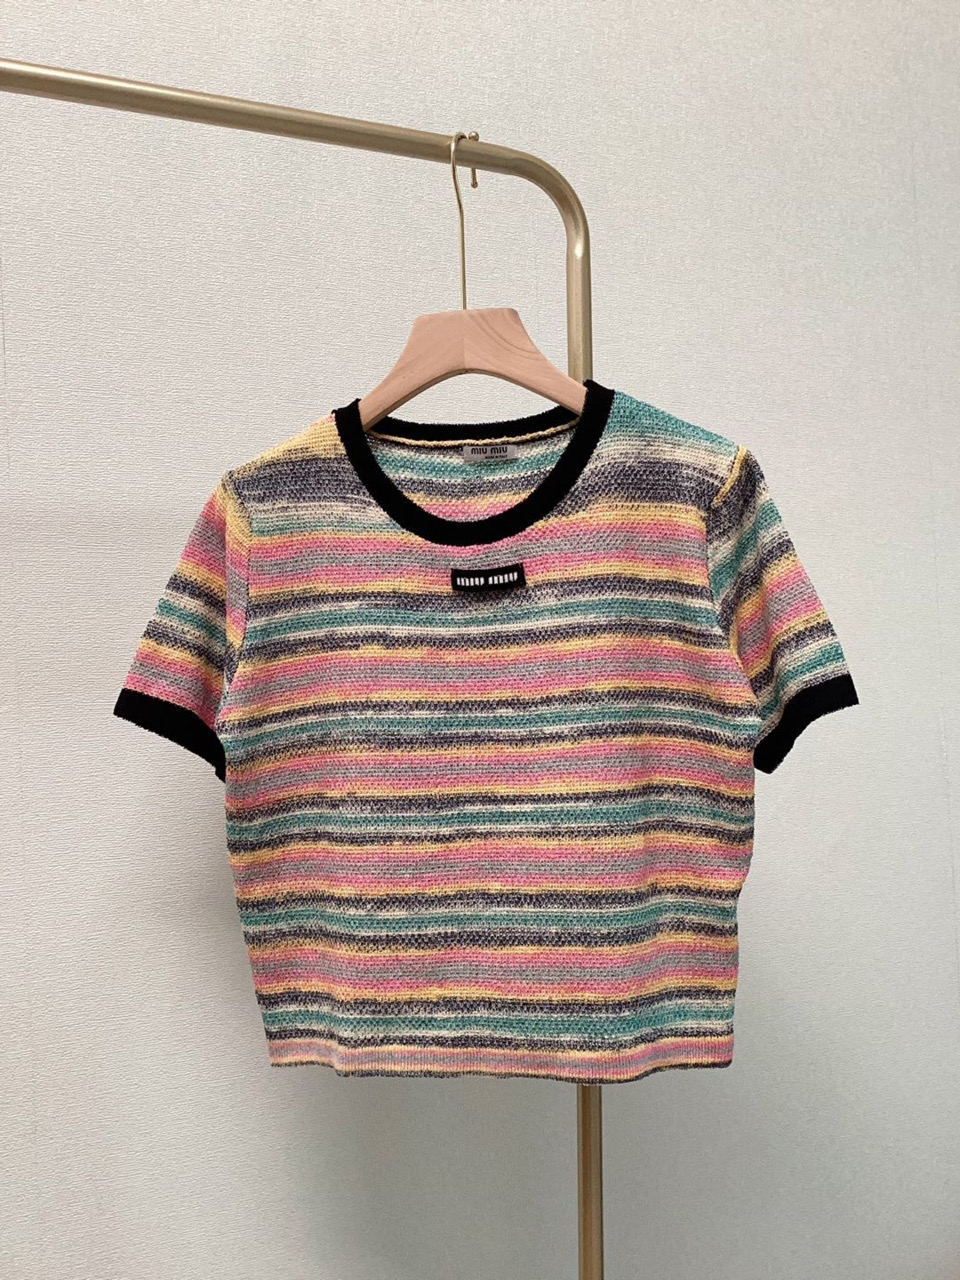 MiuMiu Clothing T-Shirt Top Quality Replica
 Knitting Summer Collection Fashion Short Sleeve